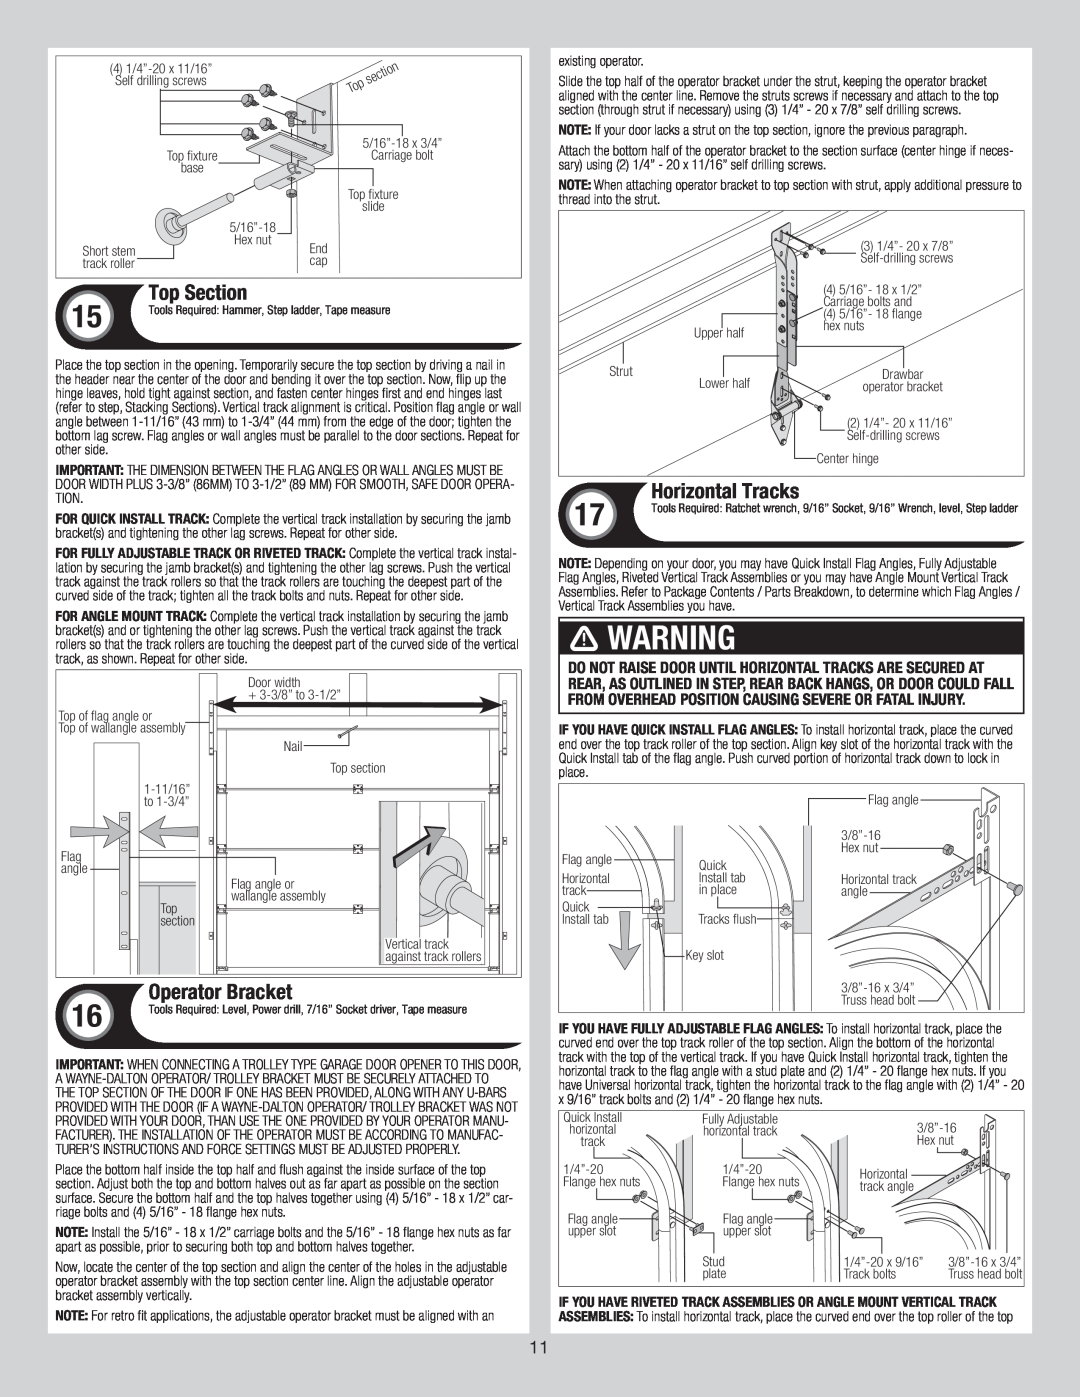 Wayne-Dalton 6600 installation instructions Top Section, Operator Bracket, Horizontal Tracks, WarningARNING 